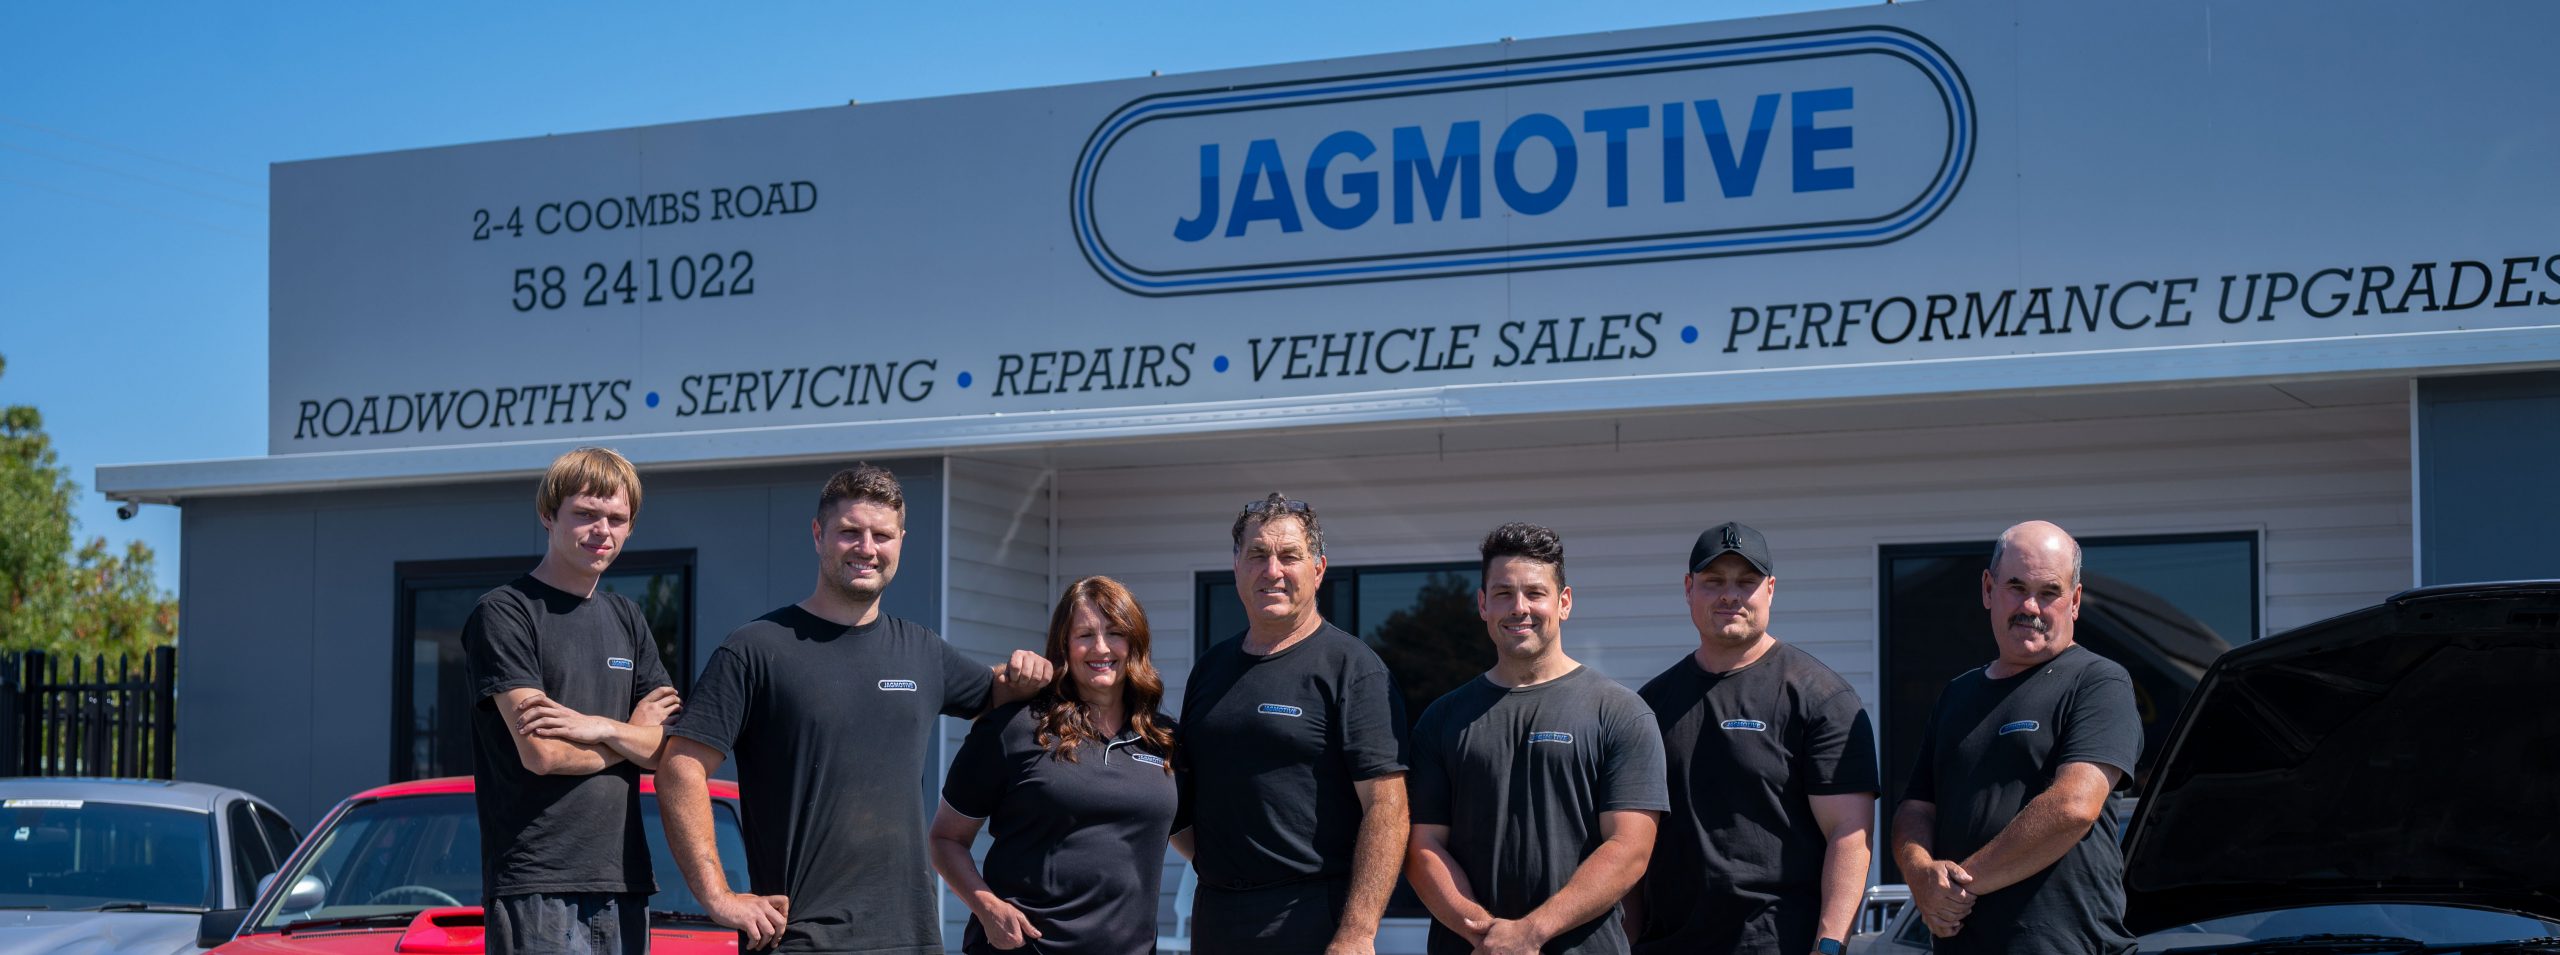 jagmotive services